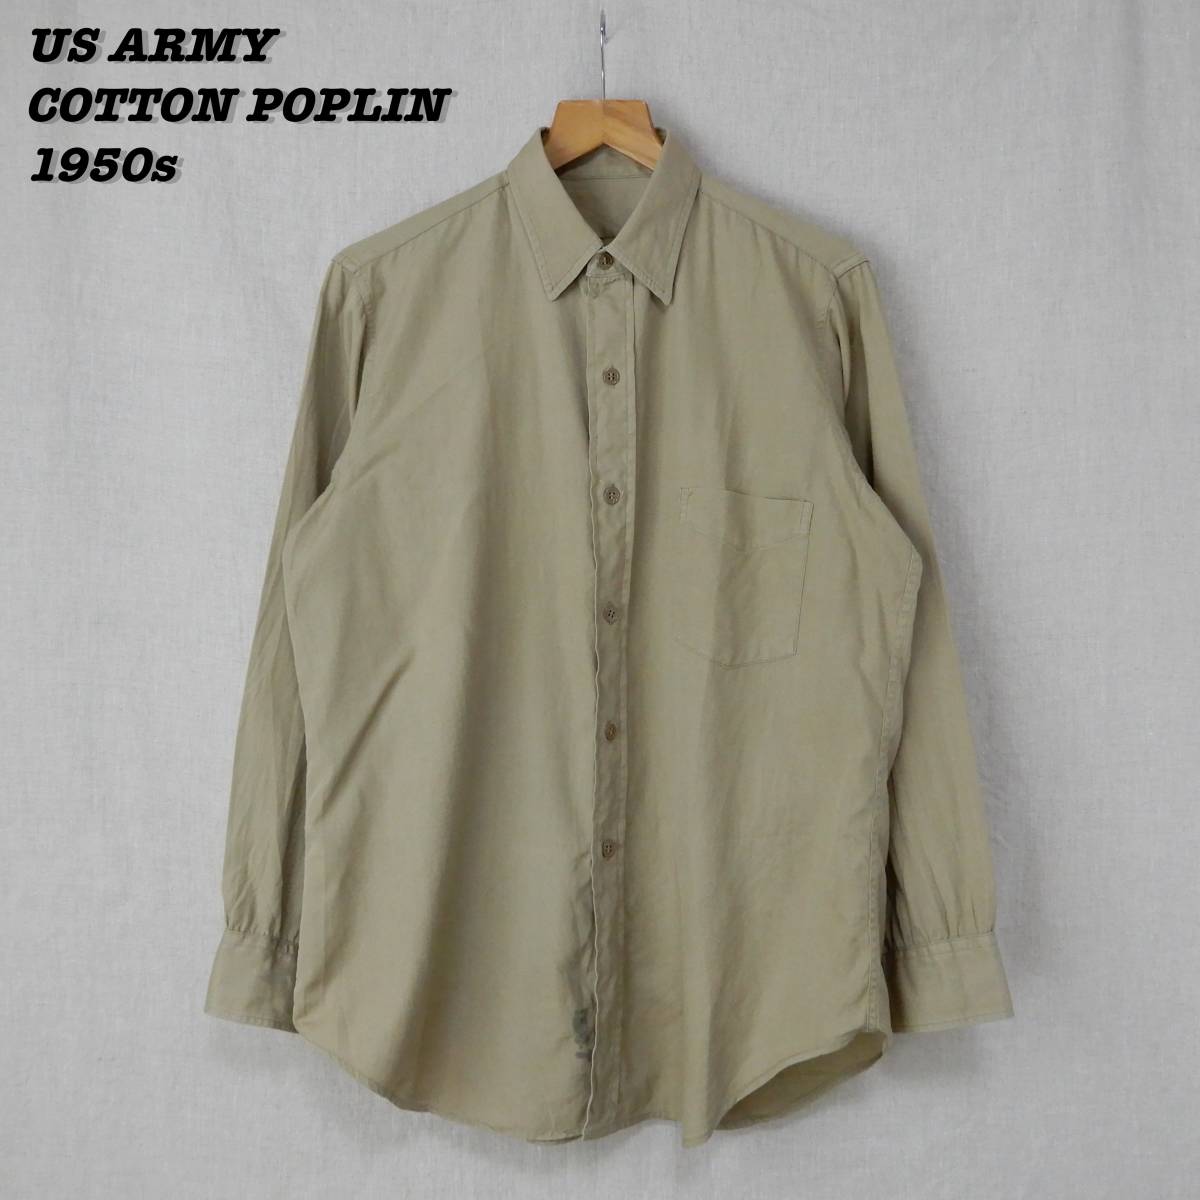 US ARMY Cotton Poplin Shirts 1950s SHIRT23093 Vintage アメリカ軍 コットンポプリン シャツ 1950年代 ヴィンテージ